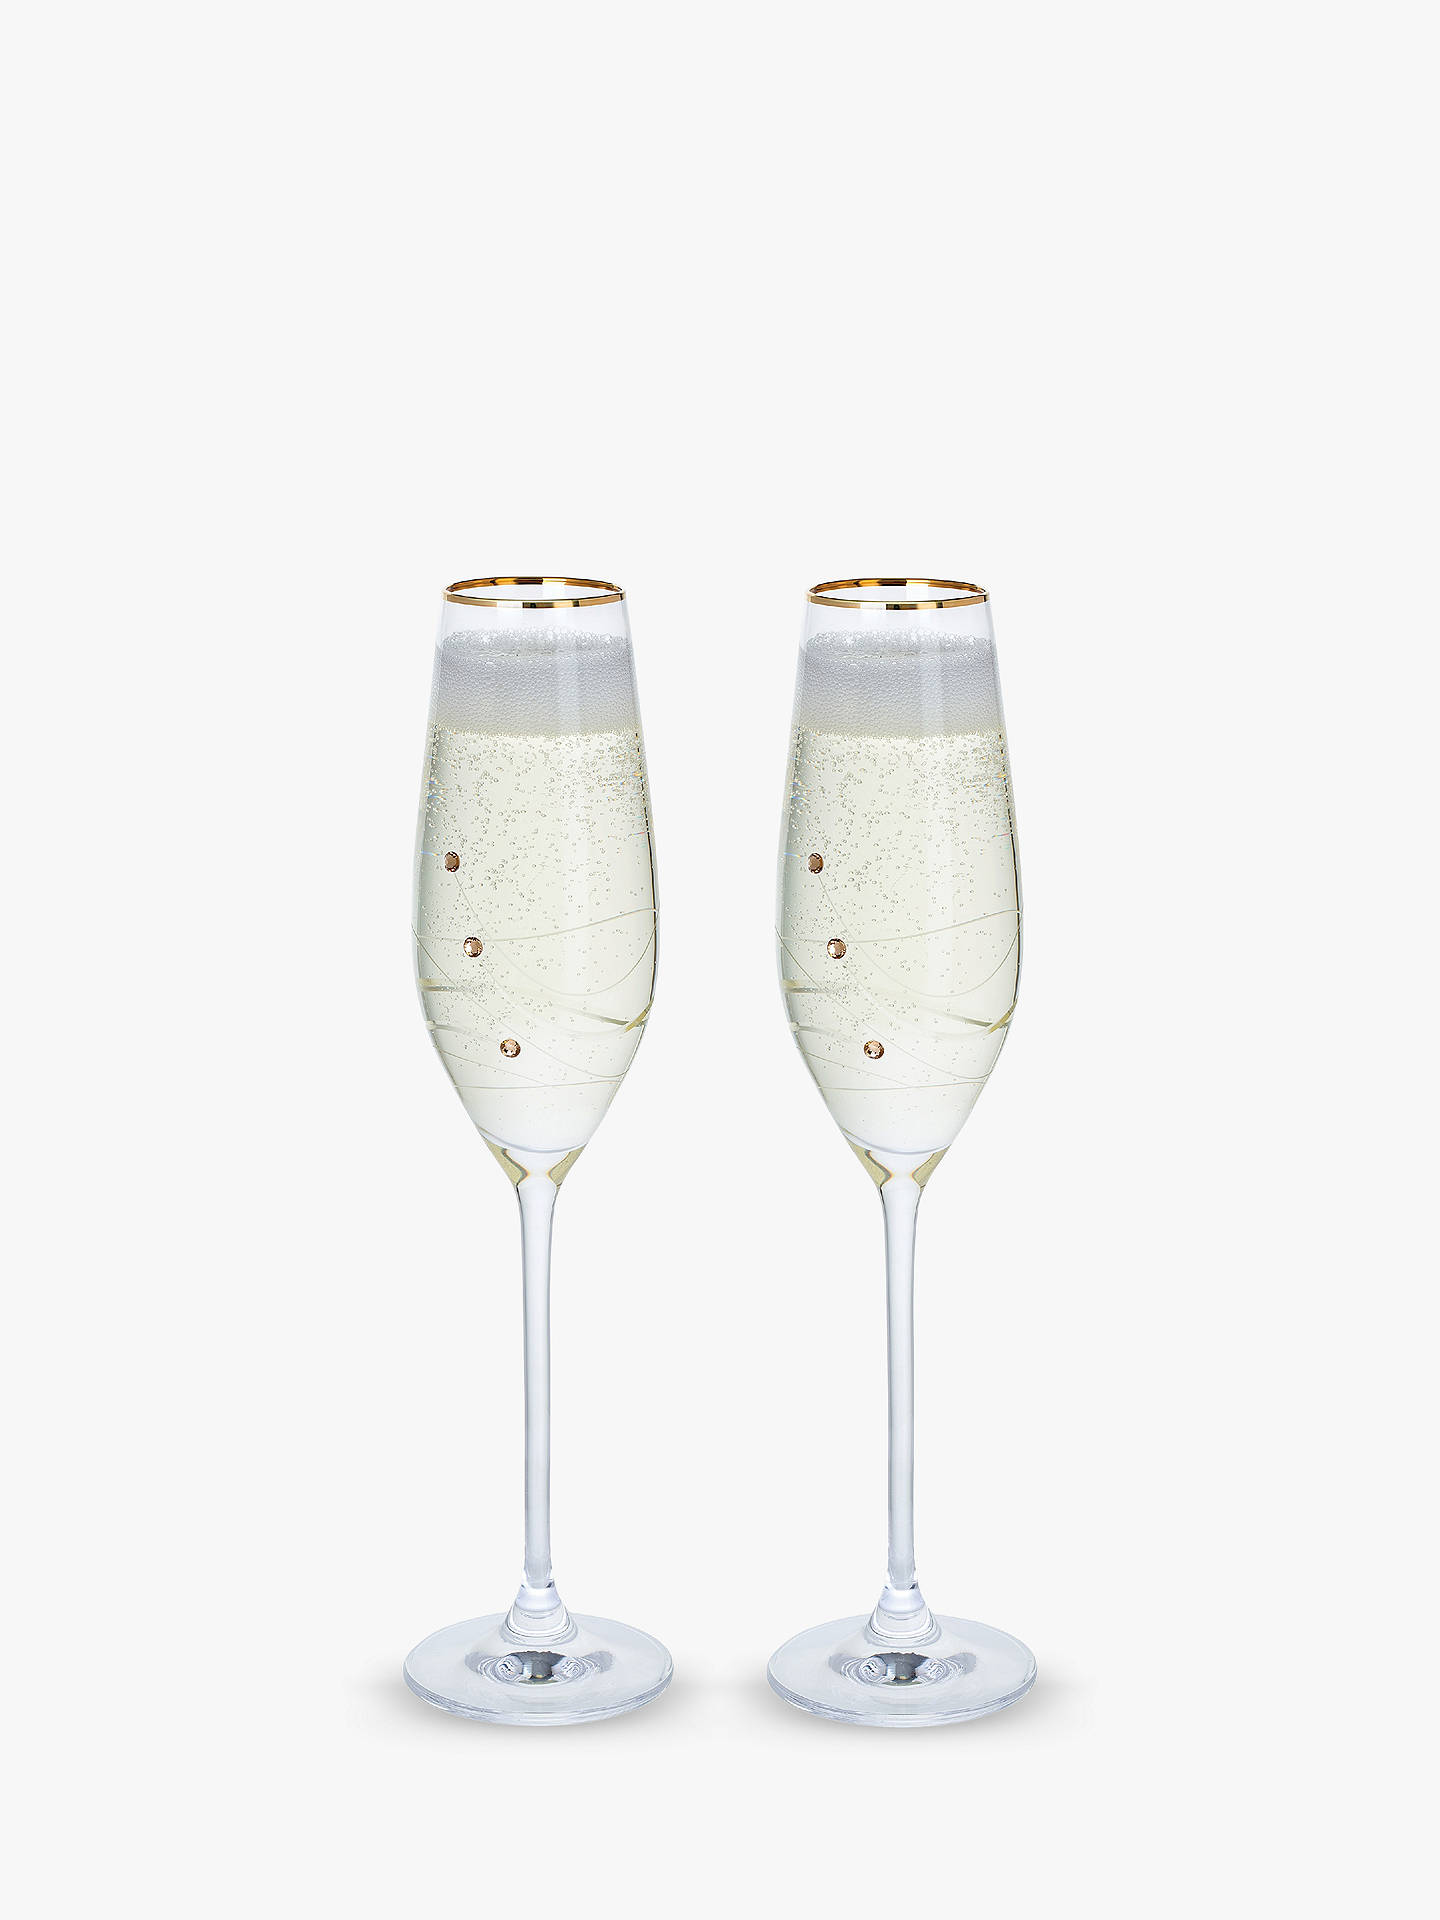 Dartington champagne flutes